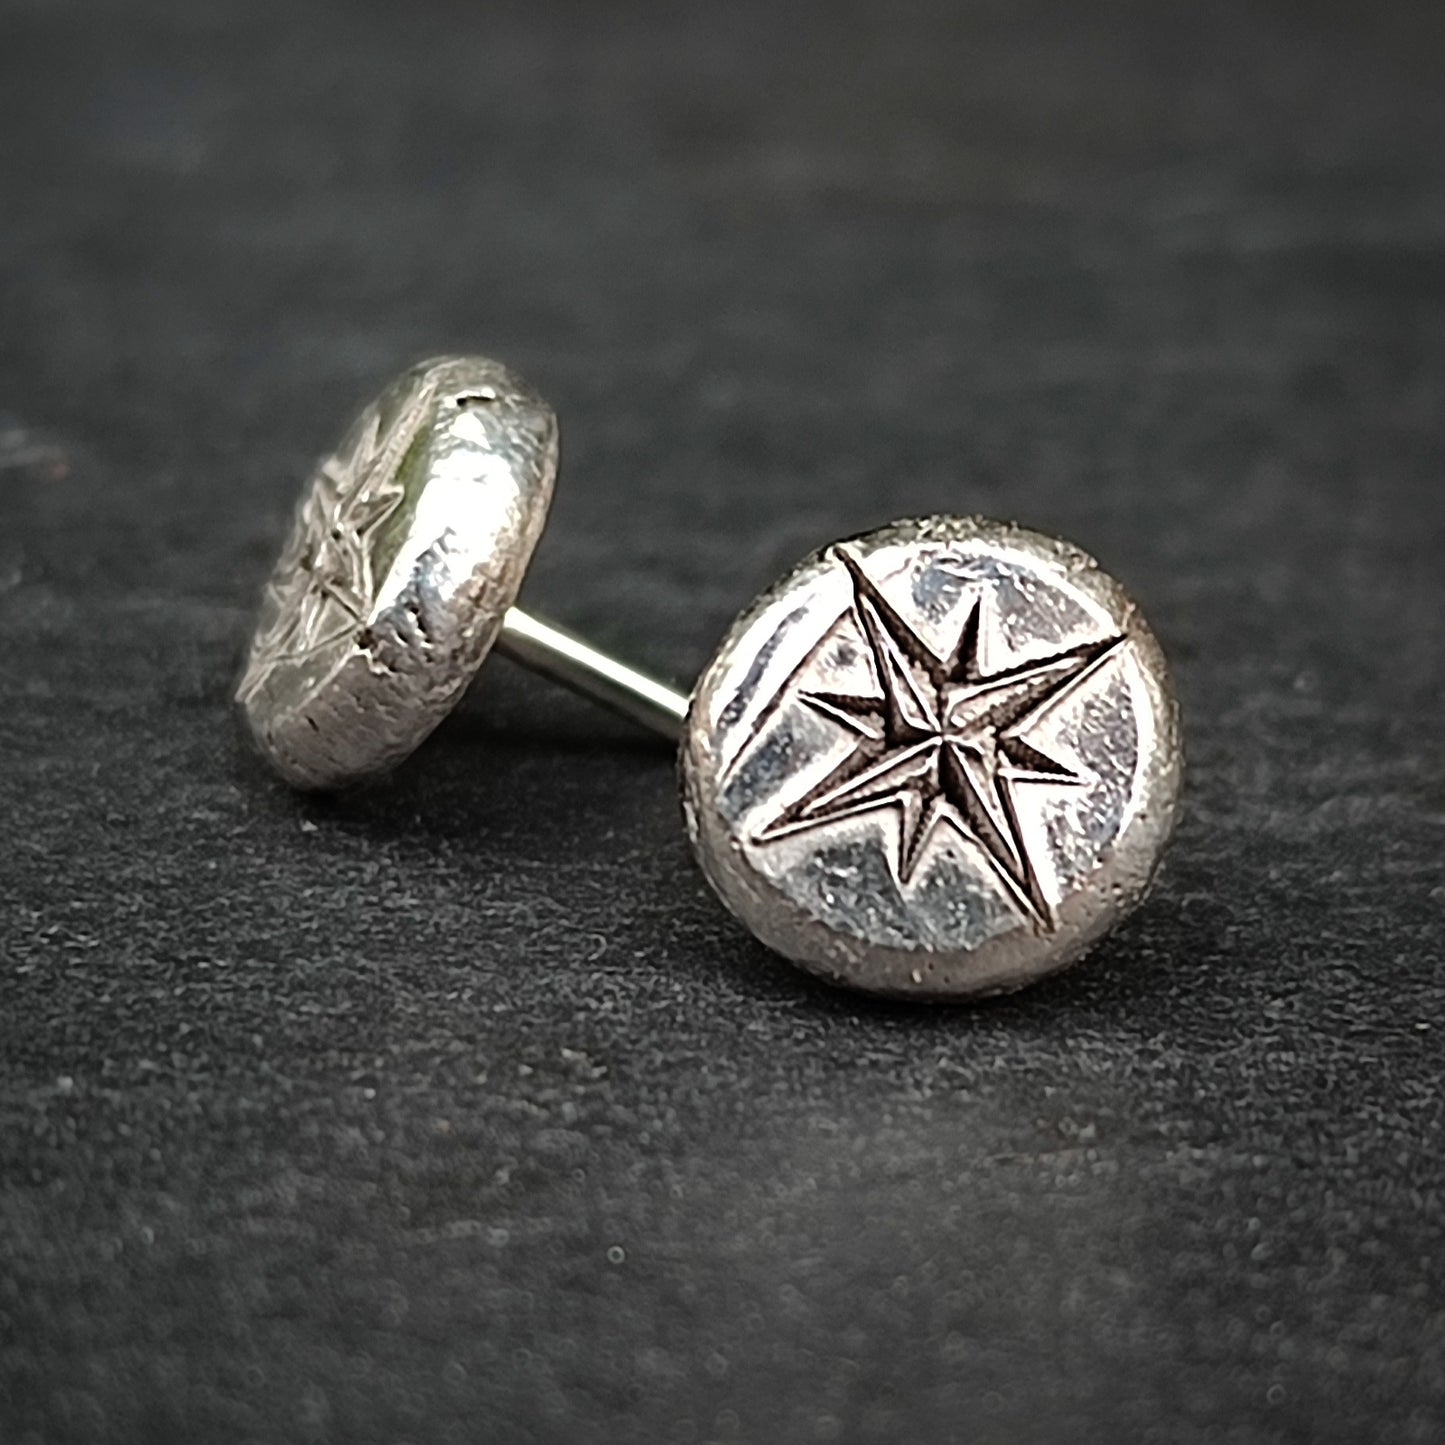 North Star Silver Earrings